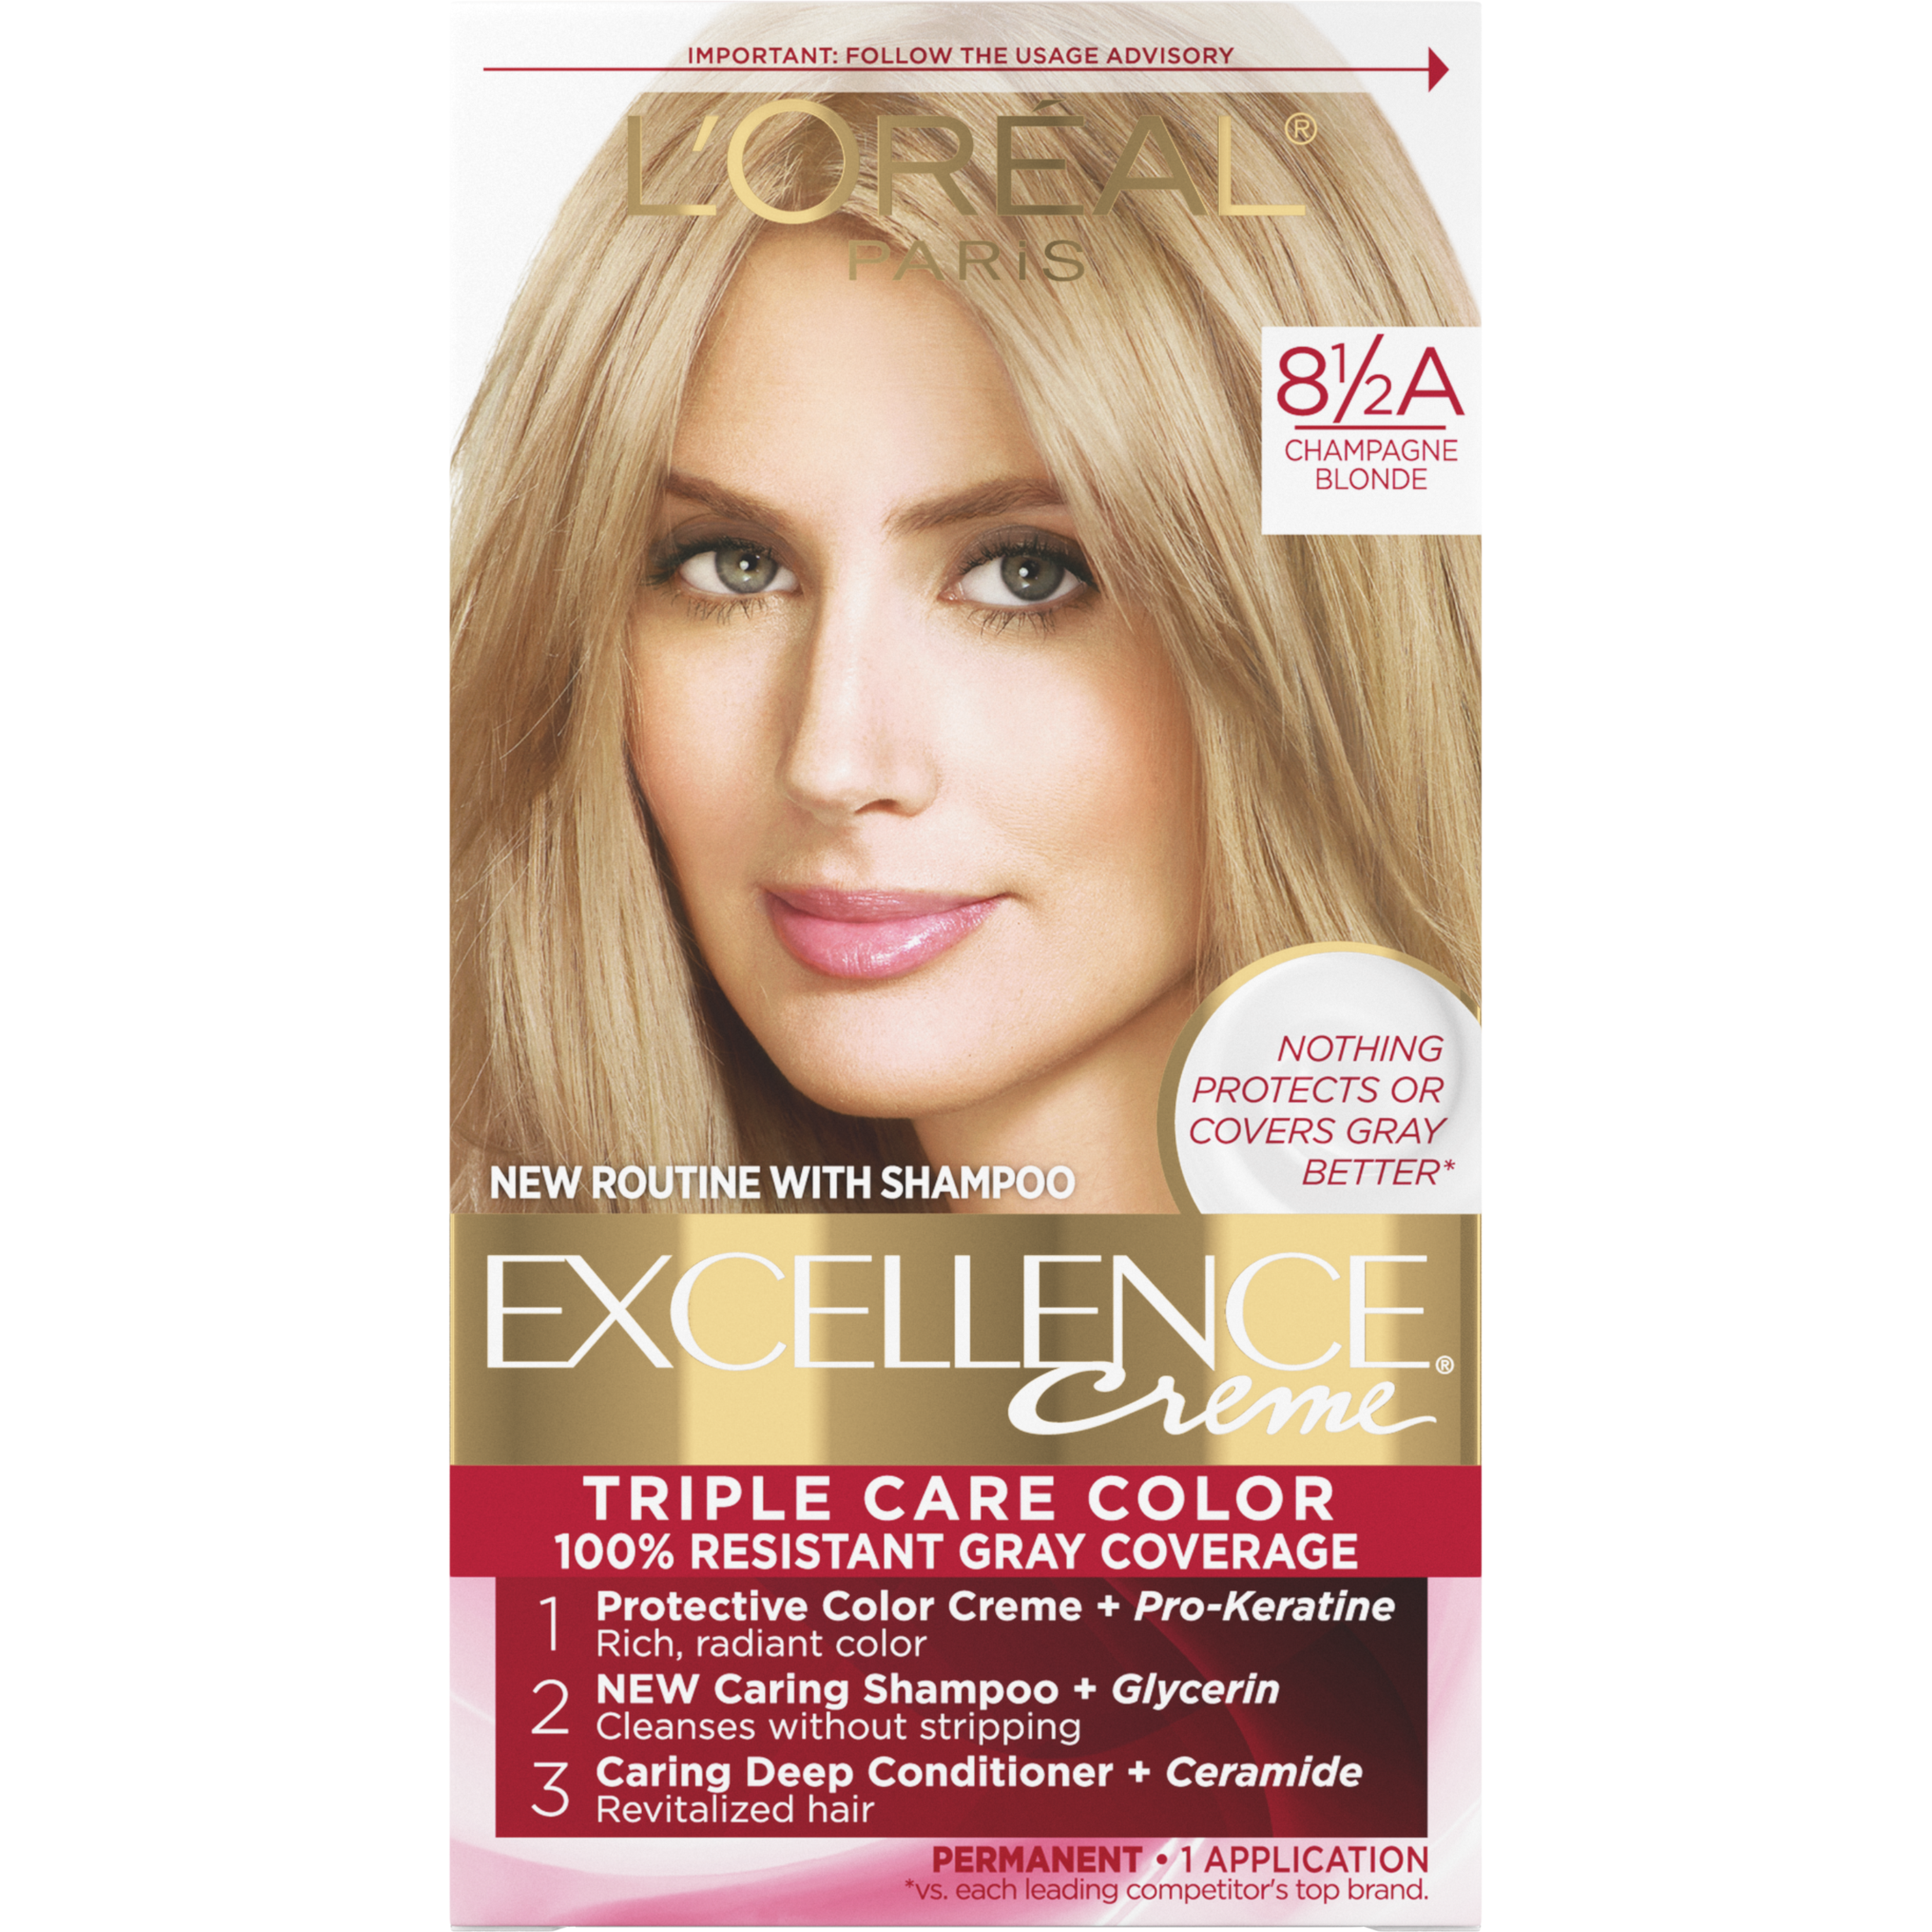 L'Oreal Paris Excellence Creme Level 3 Permanent Hair Color Kit, 8 1/2A Champagne Blonde - image 1 of 8